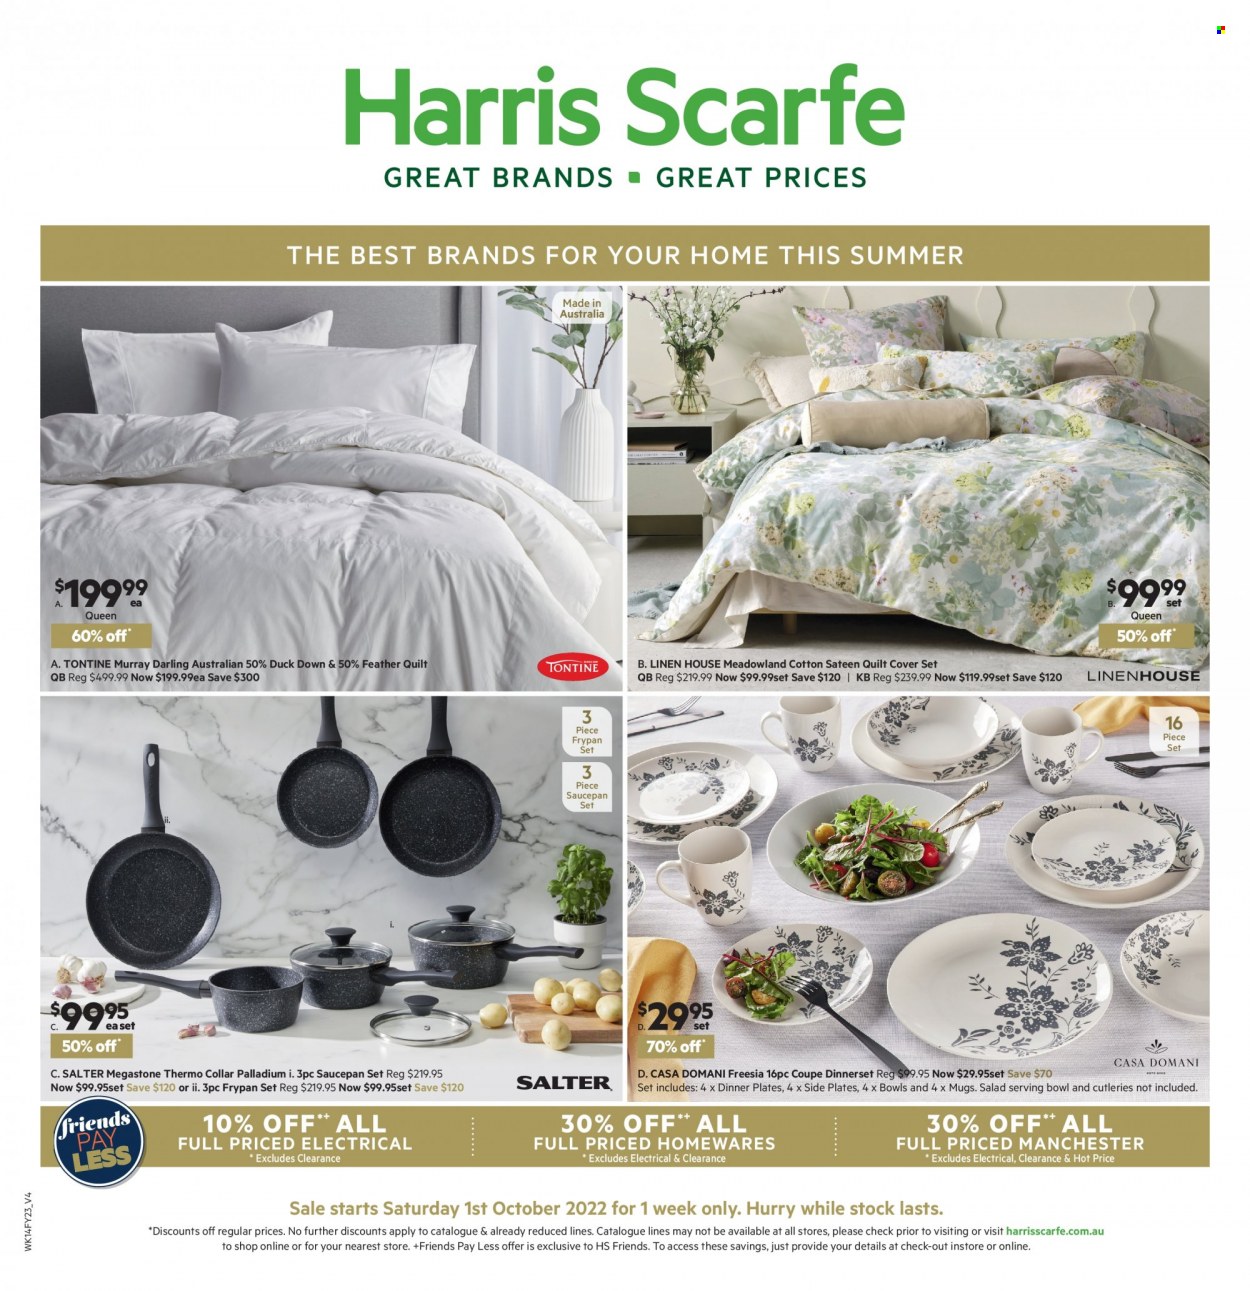 Harris Scarfe catalogue.